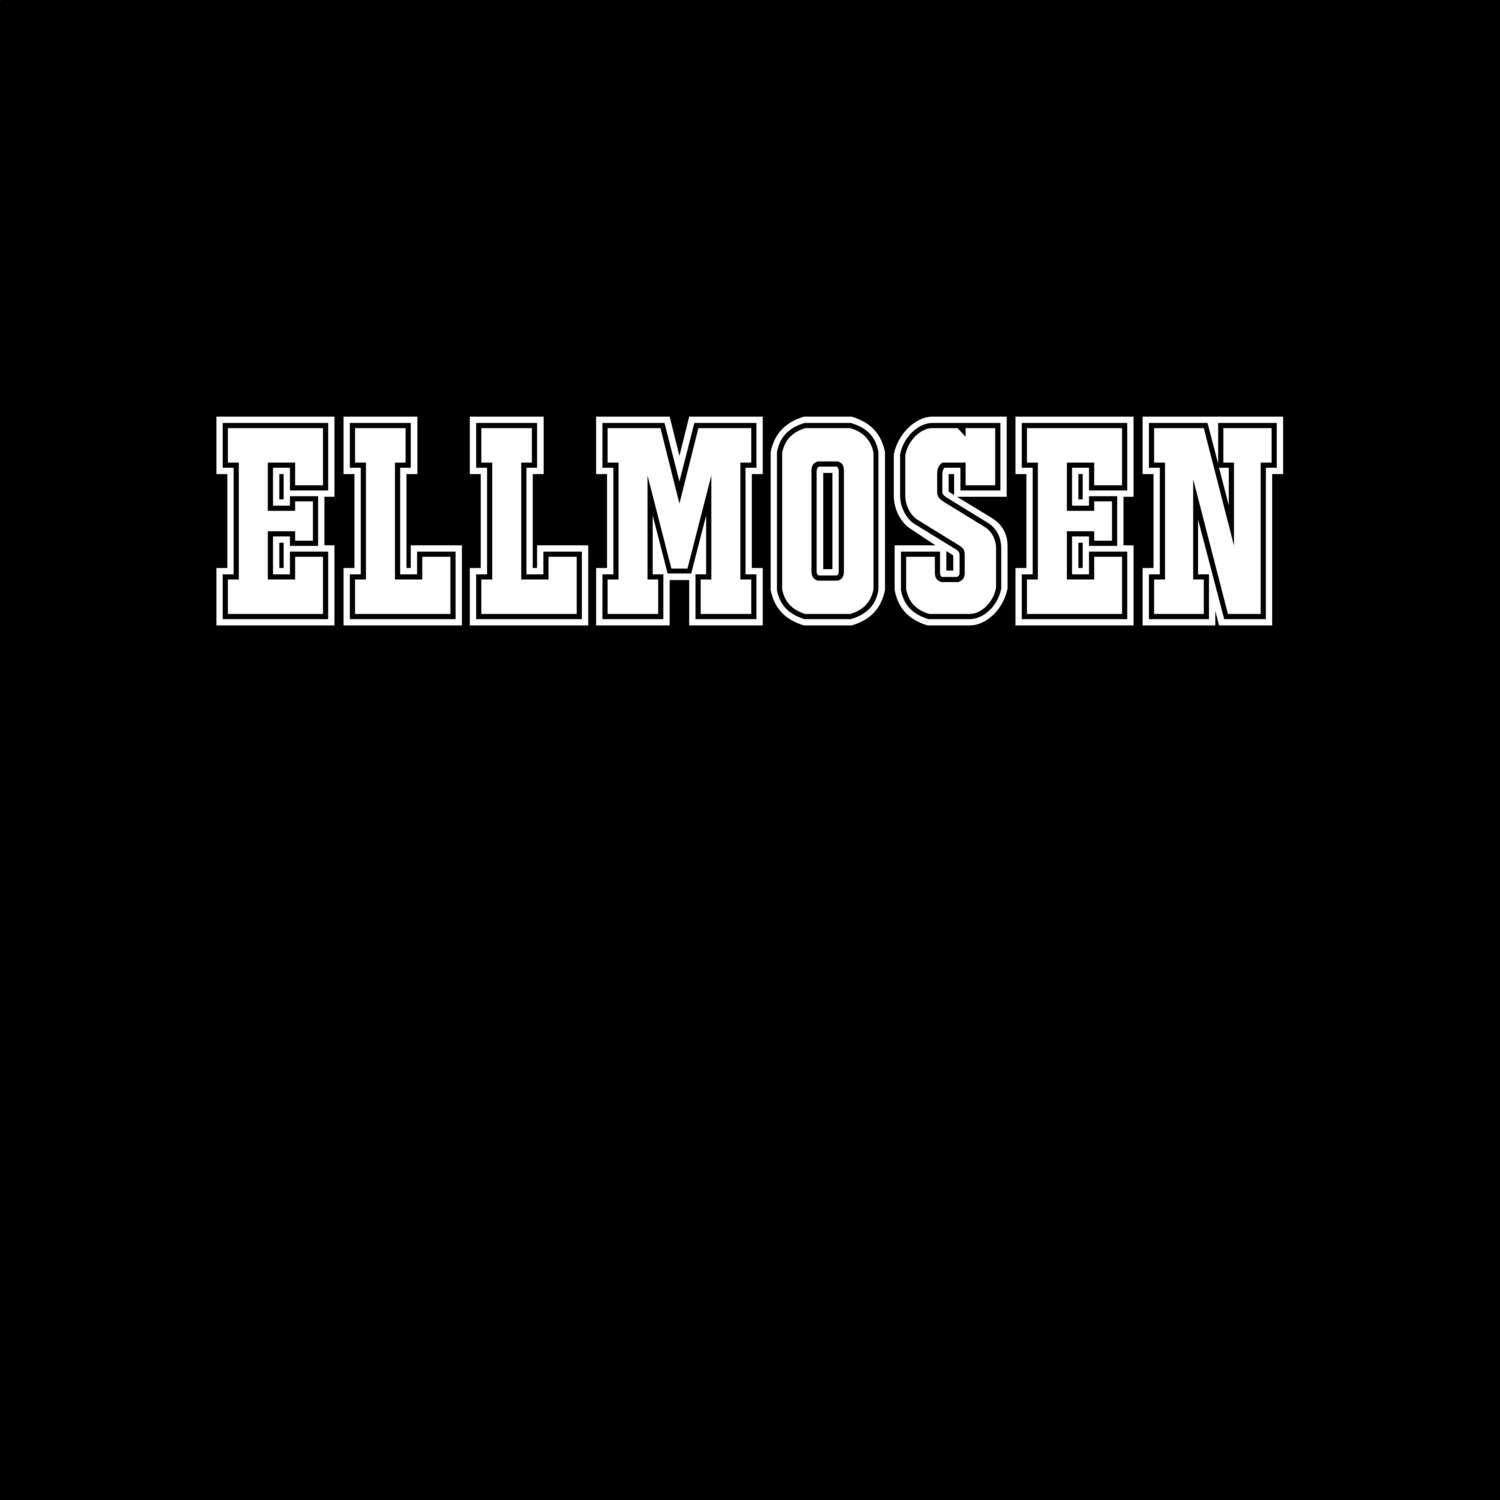 Ellmosen T-Shirt »Classic«